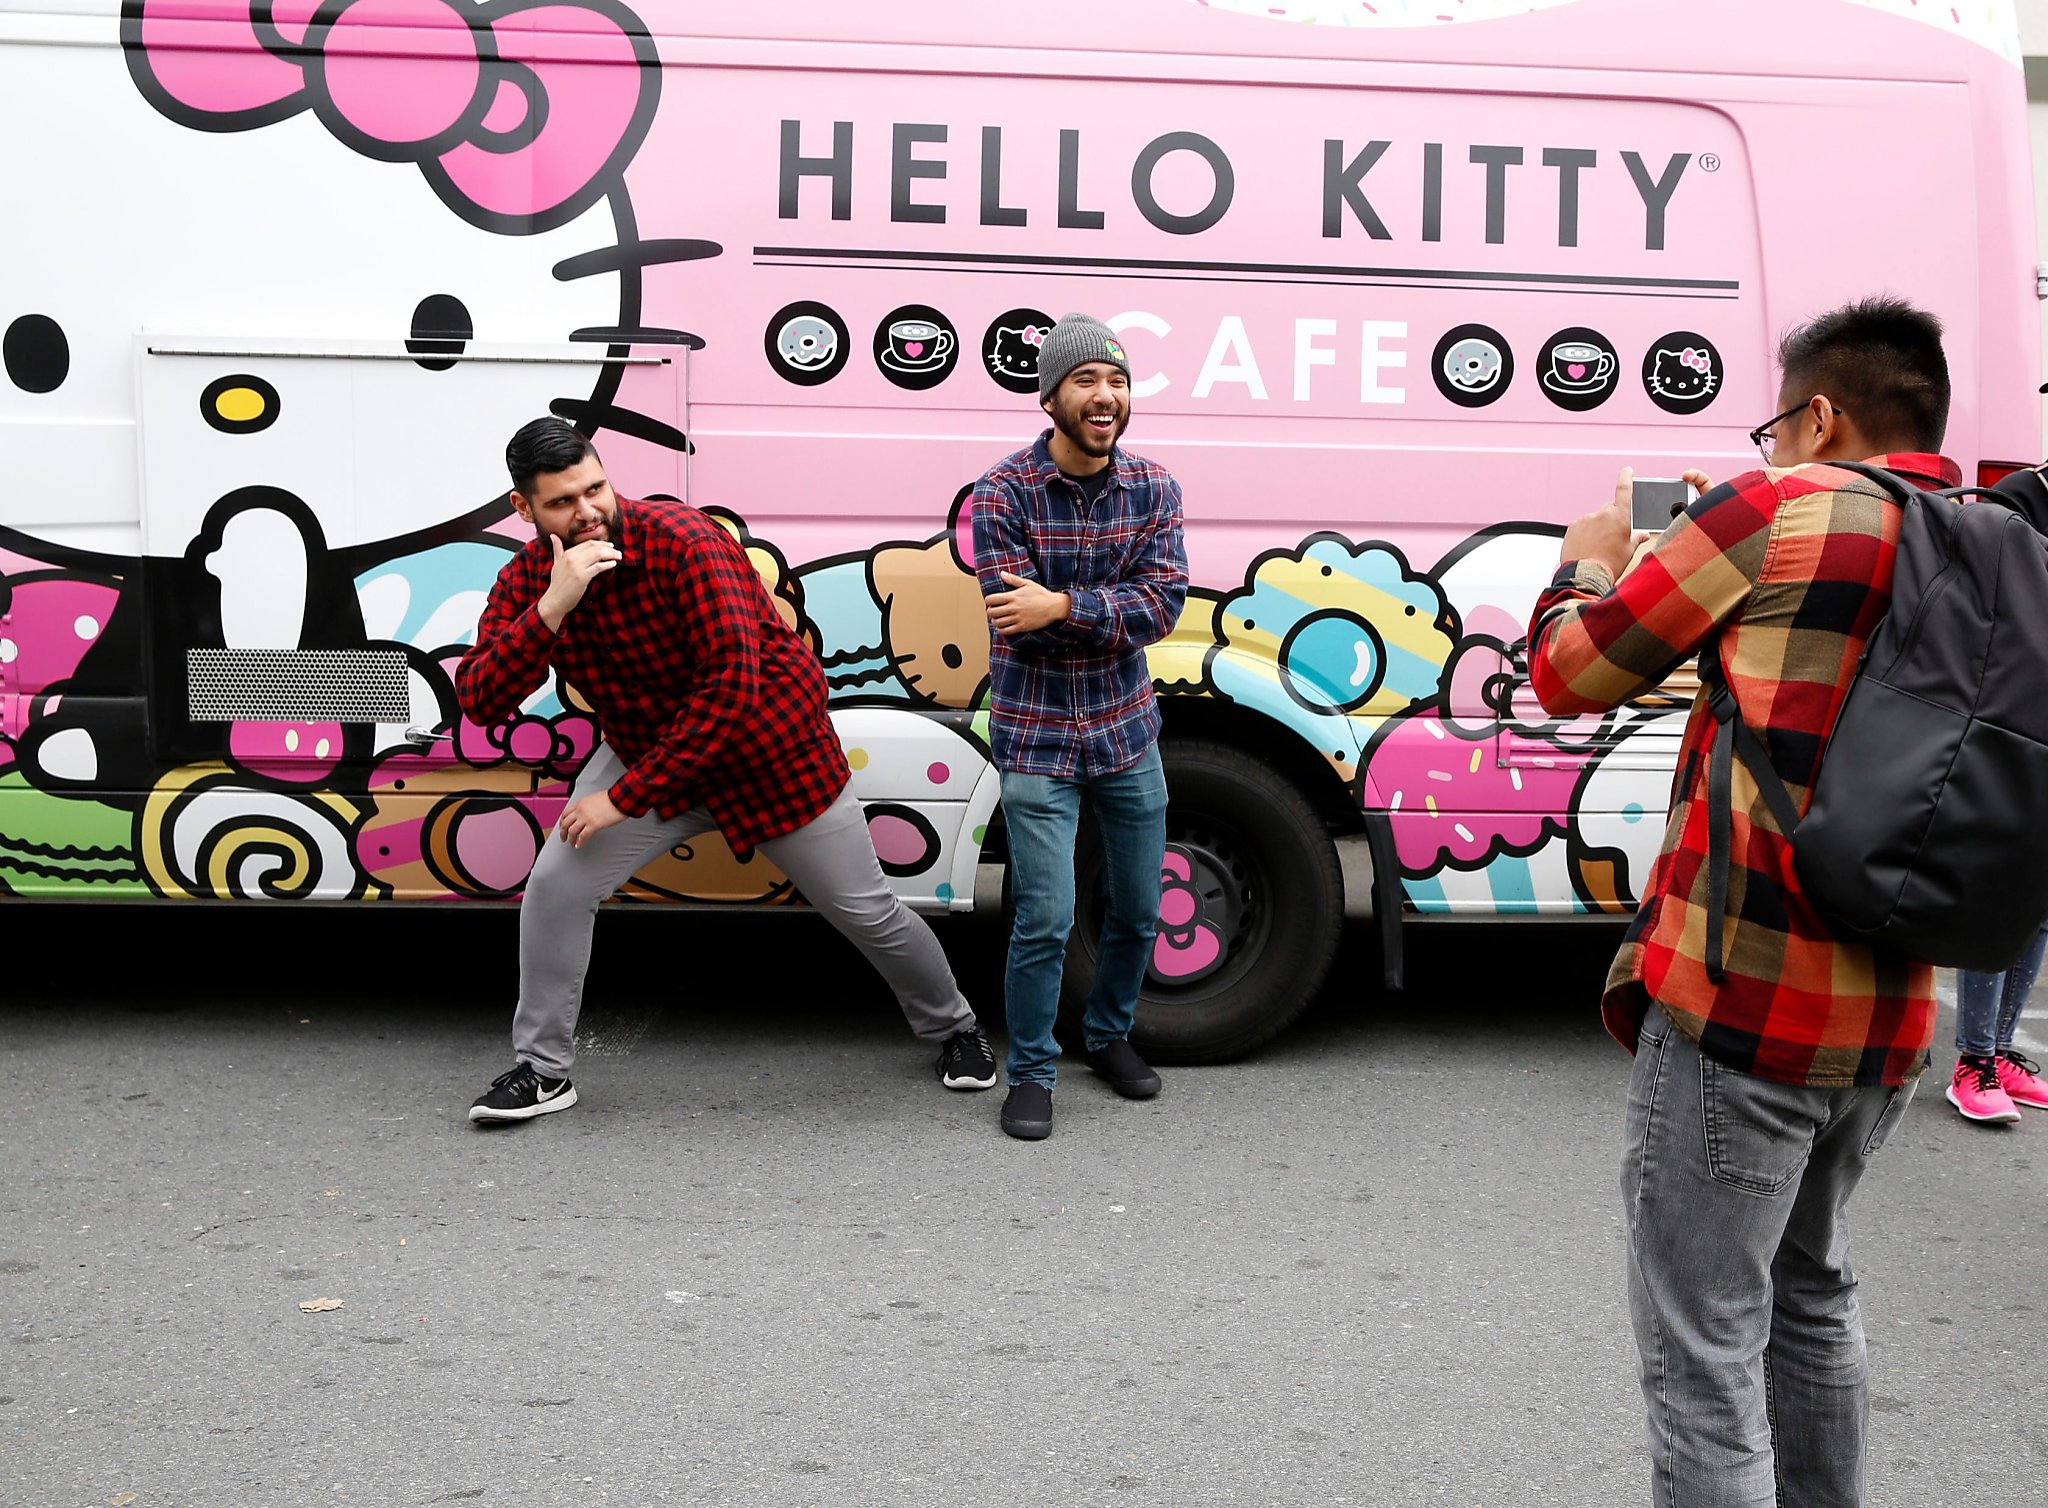 Hello Kitty Cafe rolling into San Jose, Walnut Creek, Pleasanton